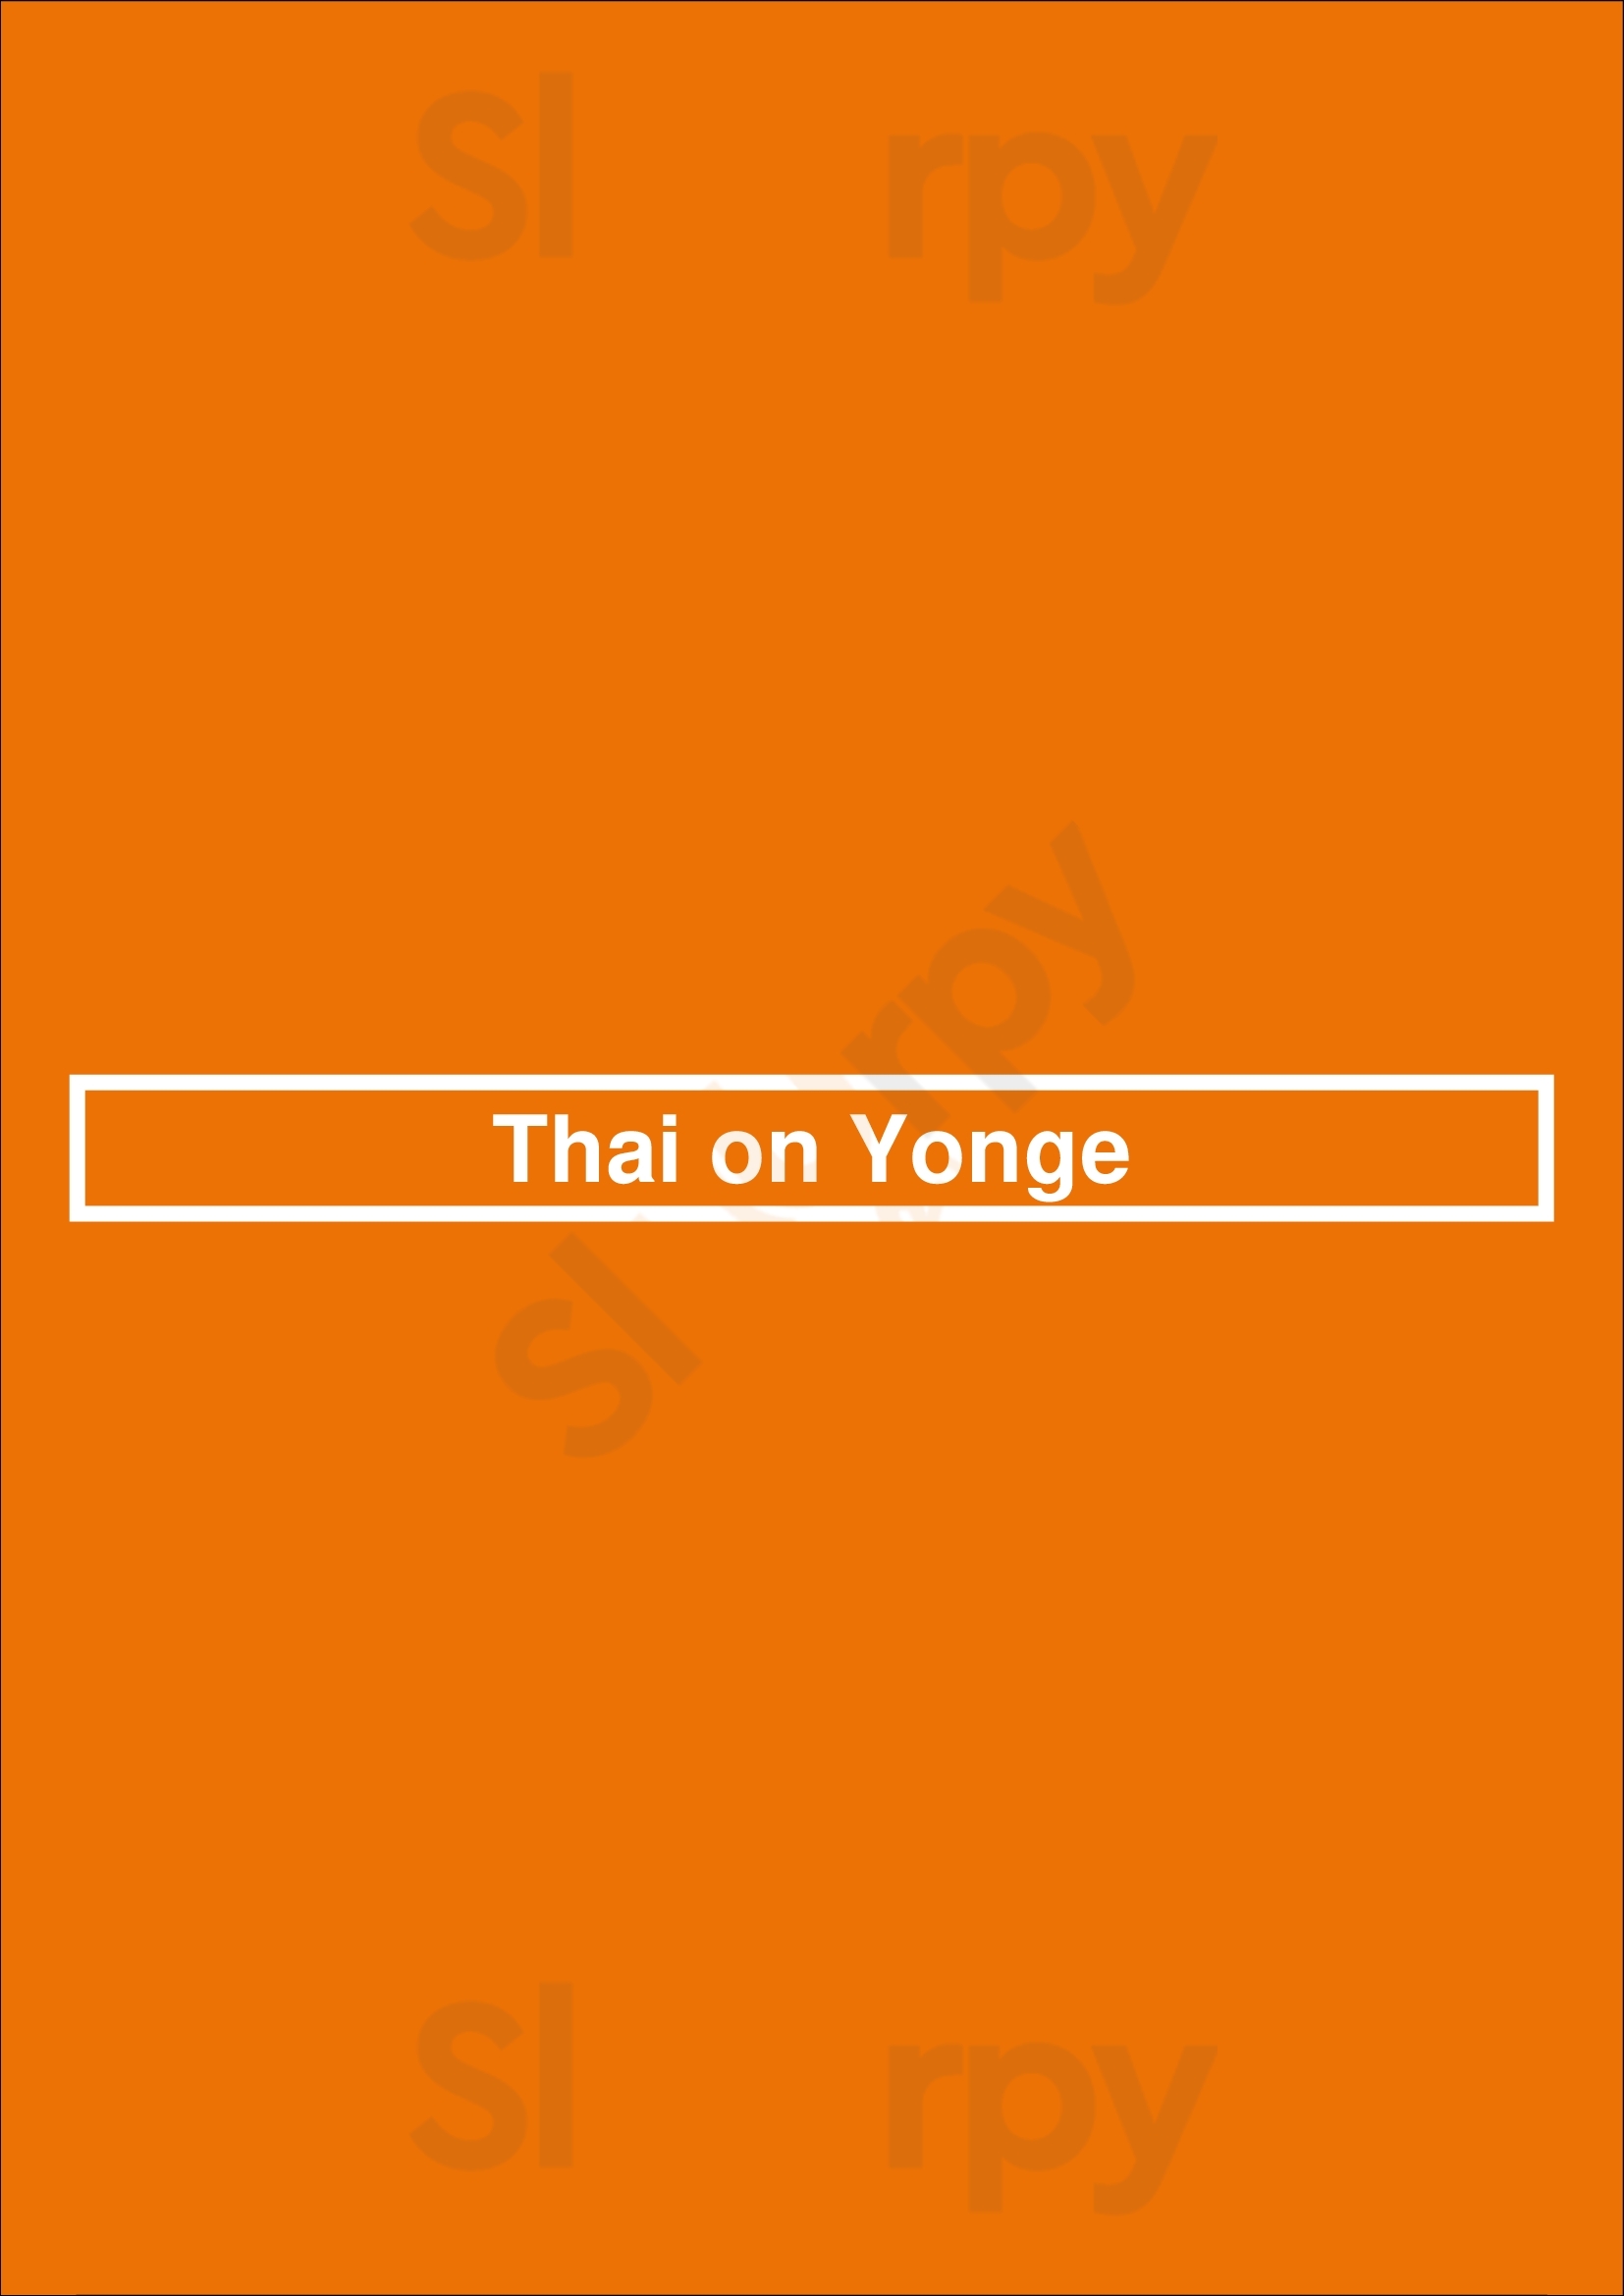 Thai On Yonge Toronto Menu - 1